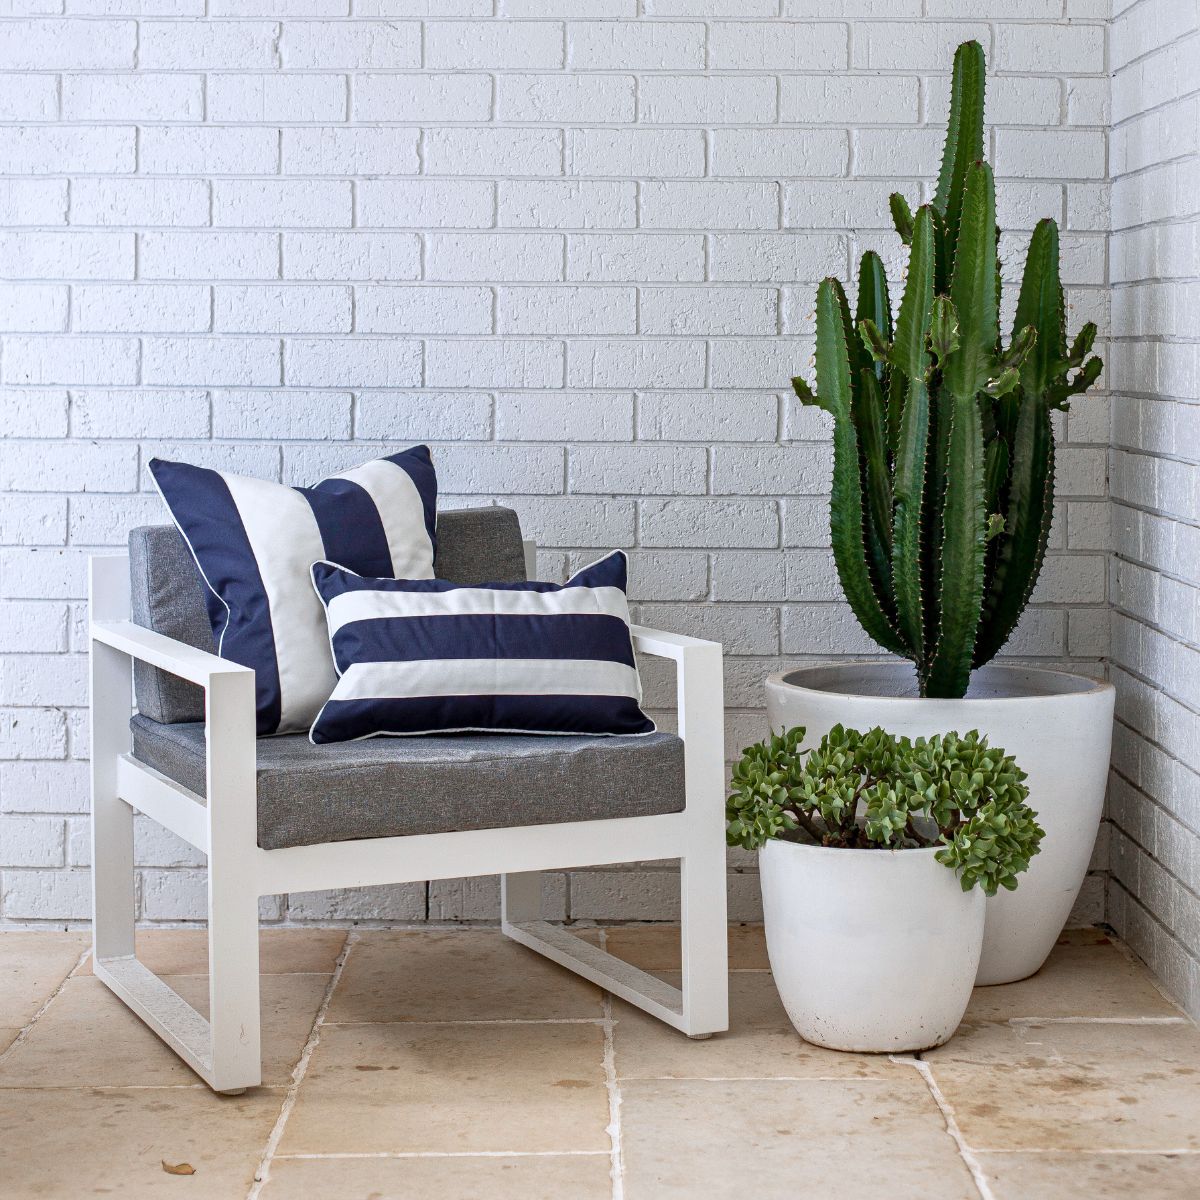 KIRRA Dark Blue and White Stripe Outdoor Cushion Cover 50 cm by 50 cm